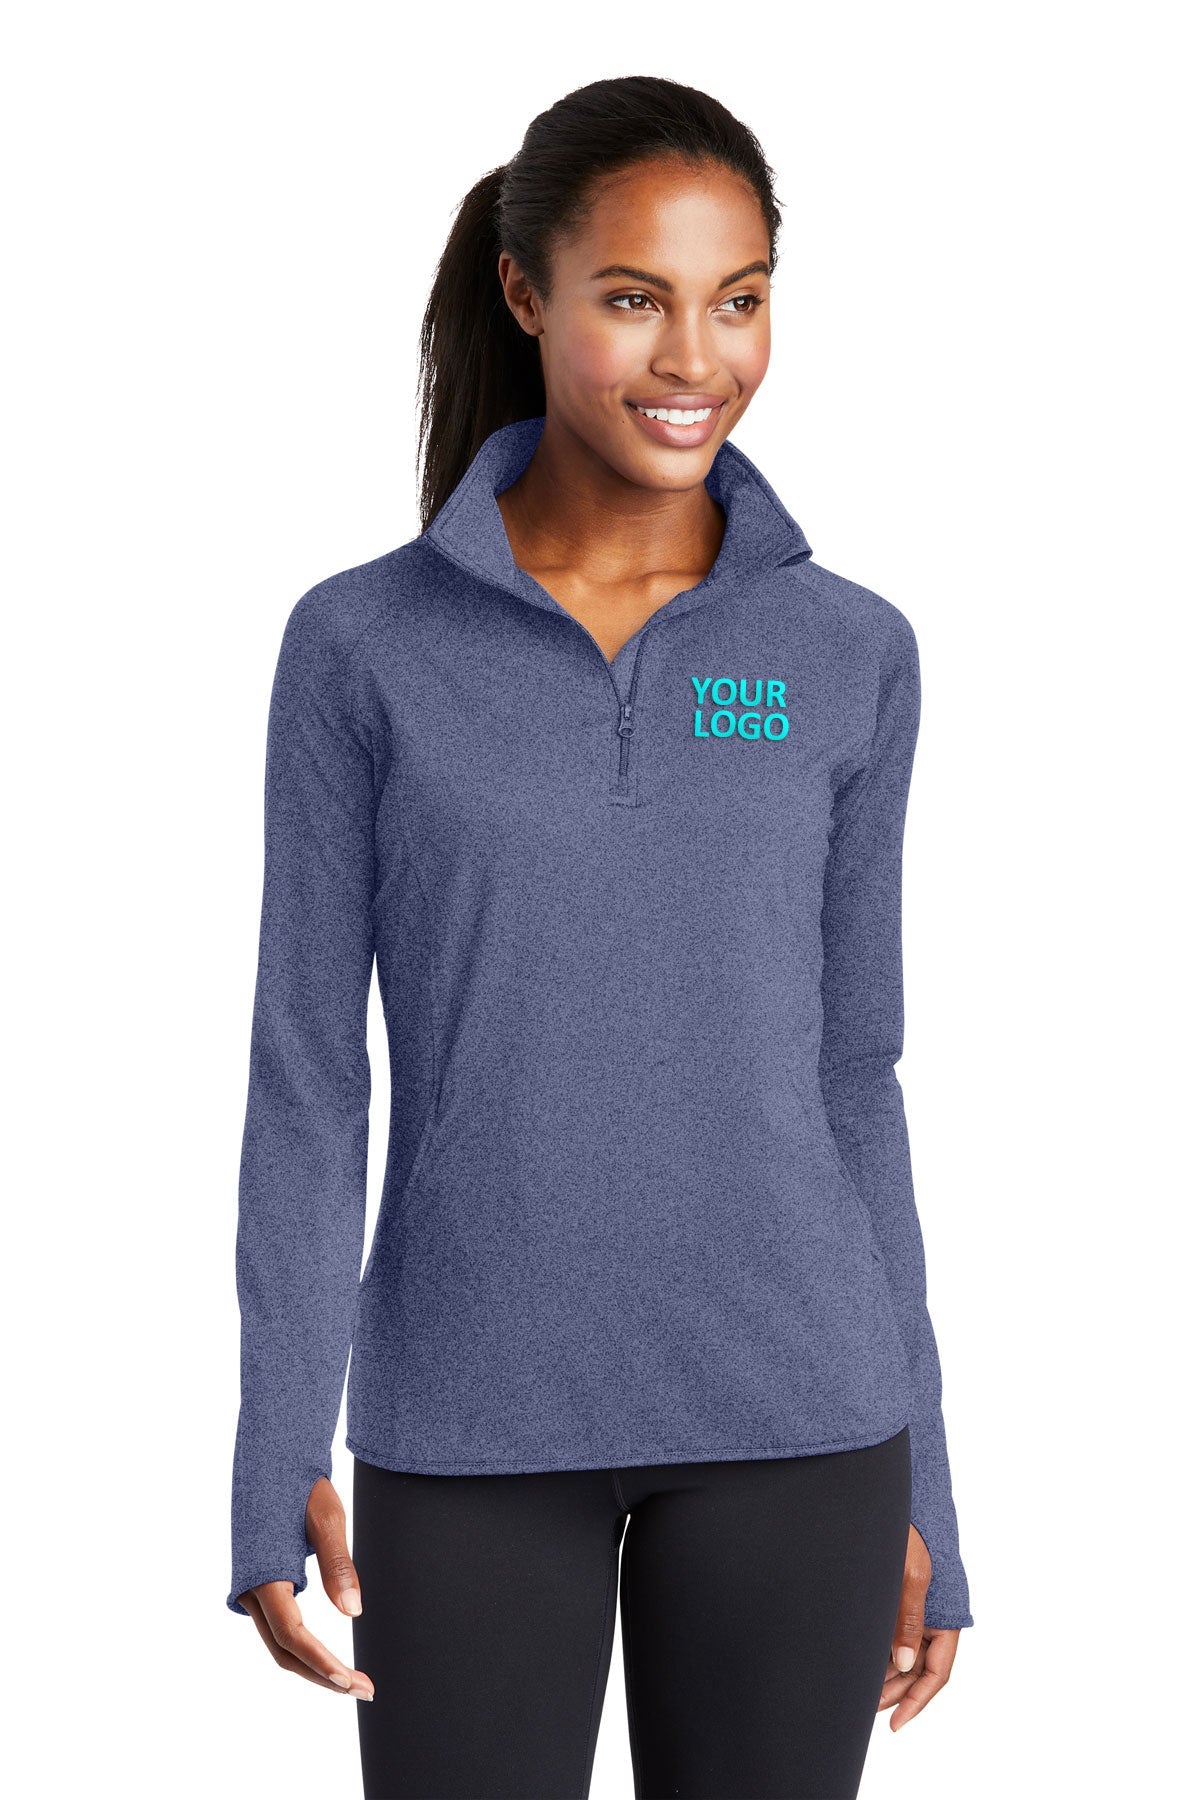 Sport-Tek True Navy Heather LST850 company sweatshirts embroidered